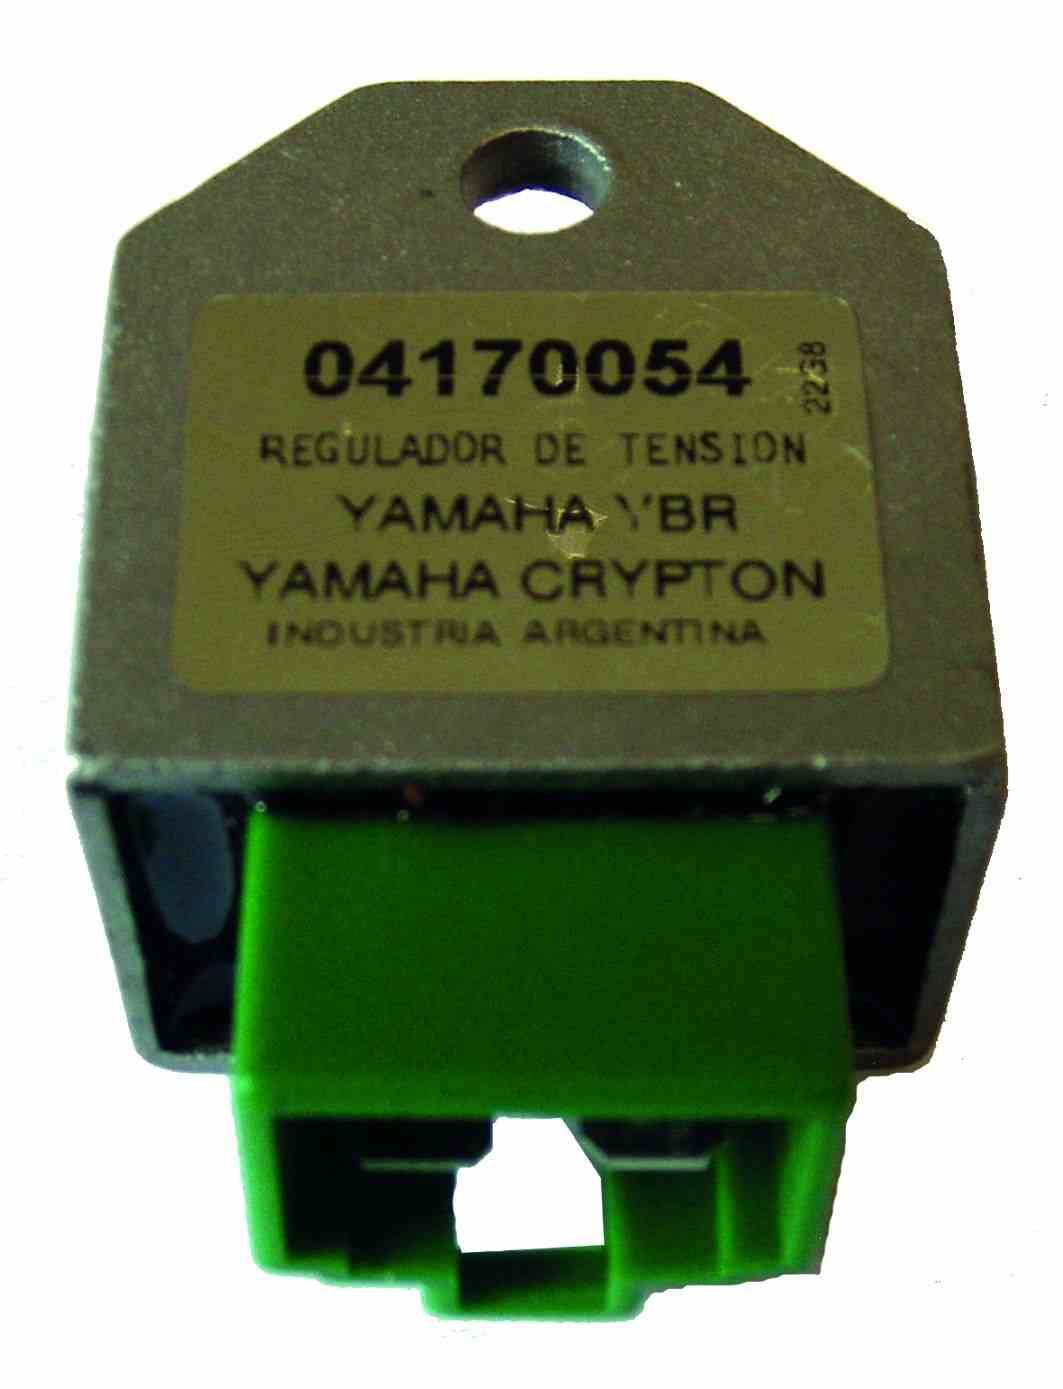 Regulador de tensión SGR 04170054